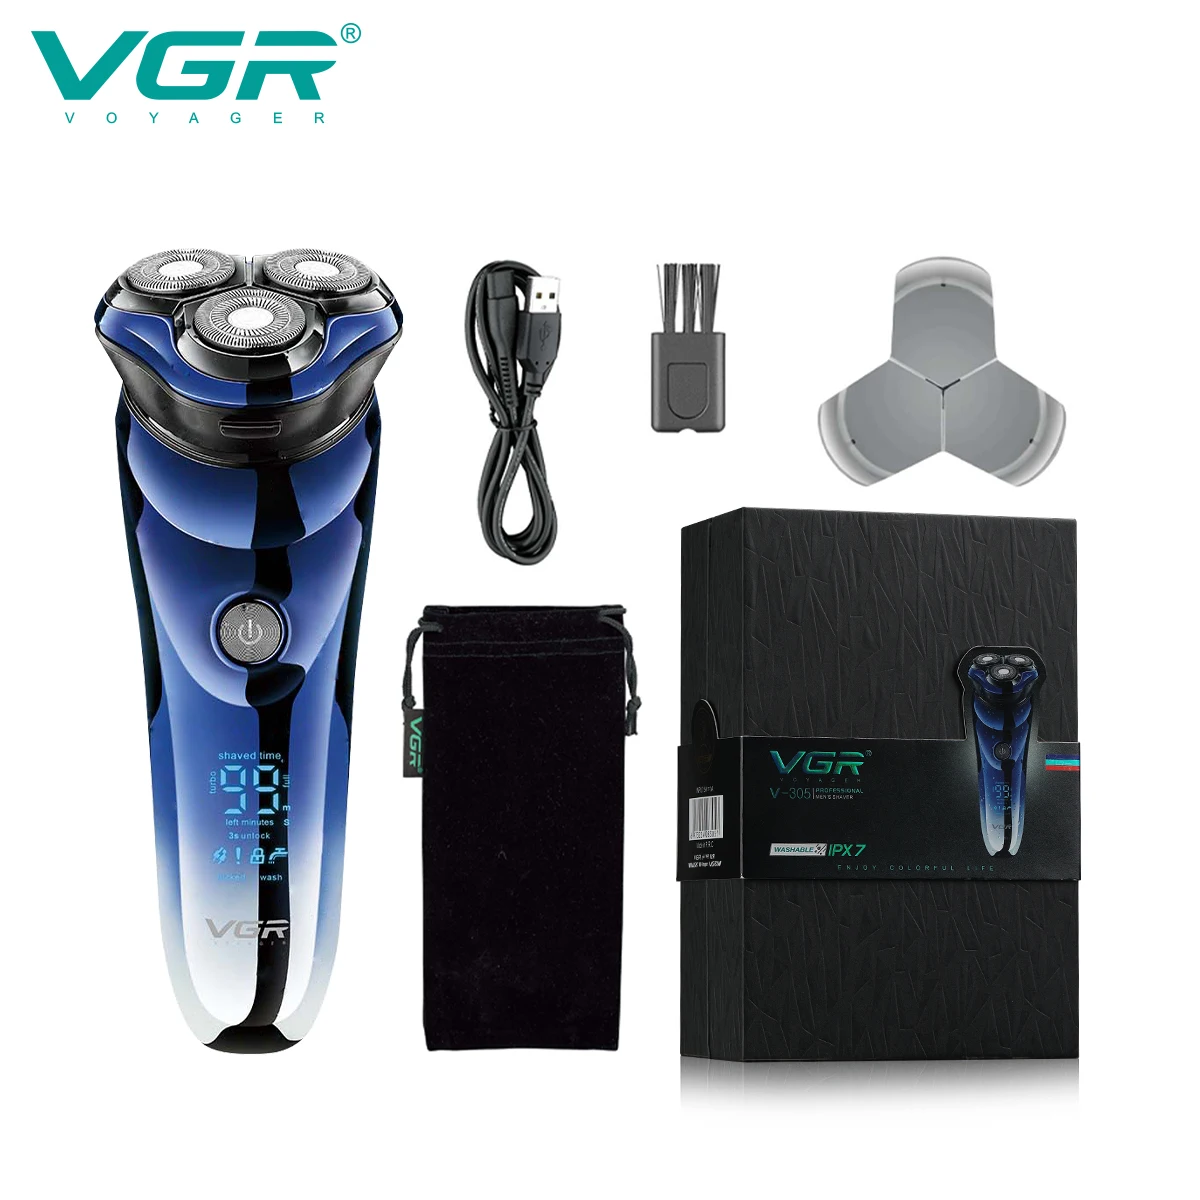 

VGR Hair Trimmer Professional Razor Waterproof Beard Cutting Machine Rechargeable Shaver Digital Display Trimmer for Men V-305